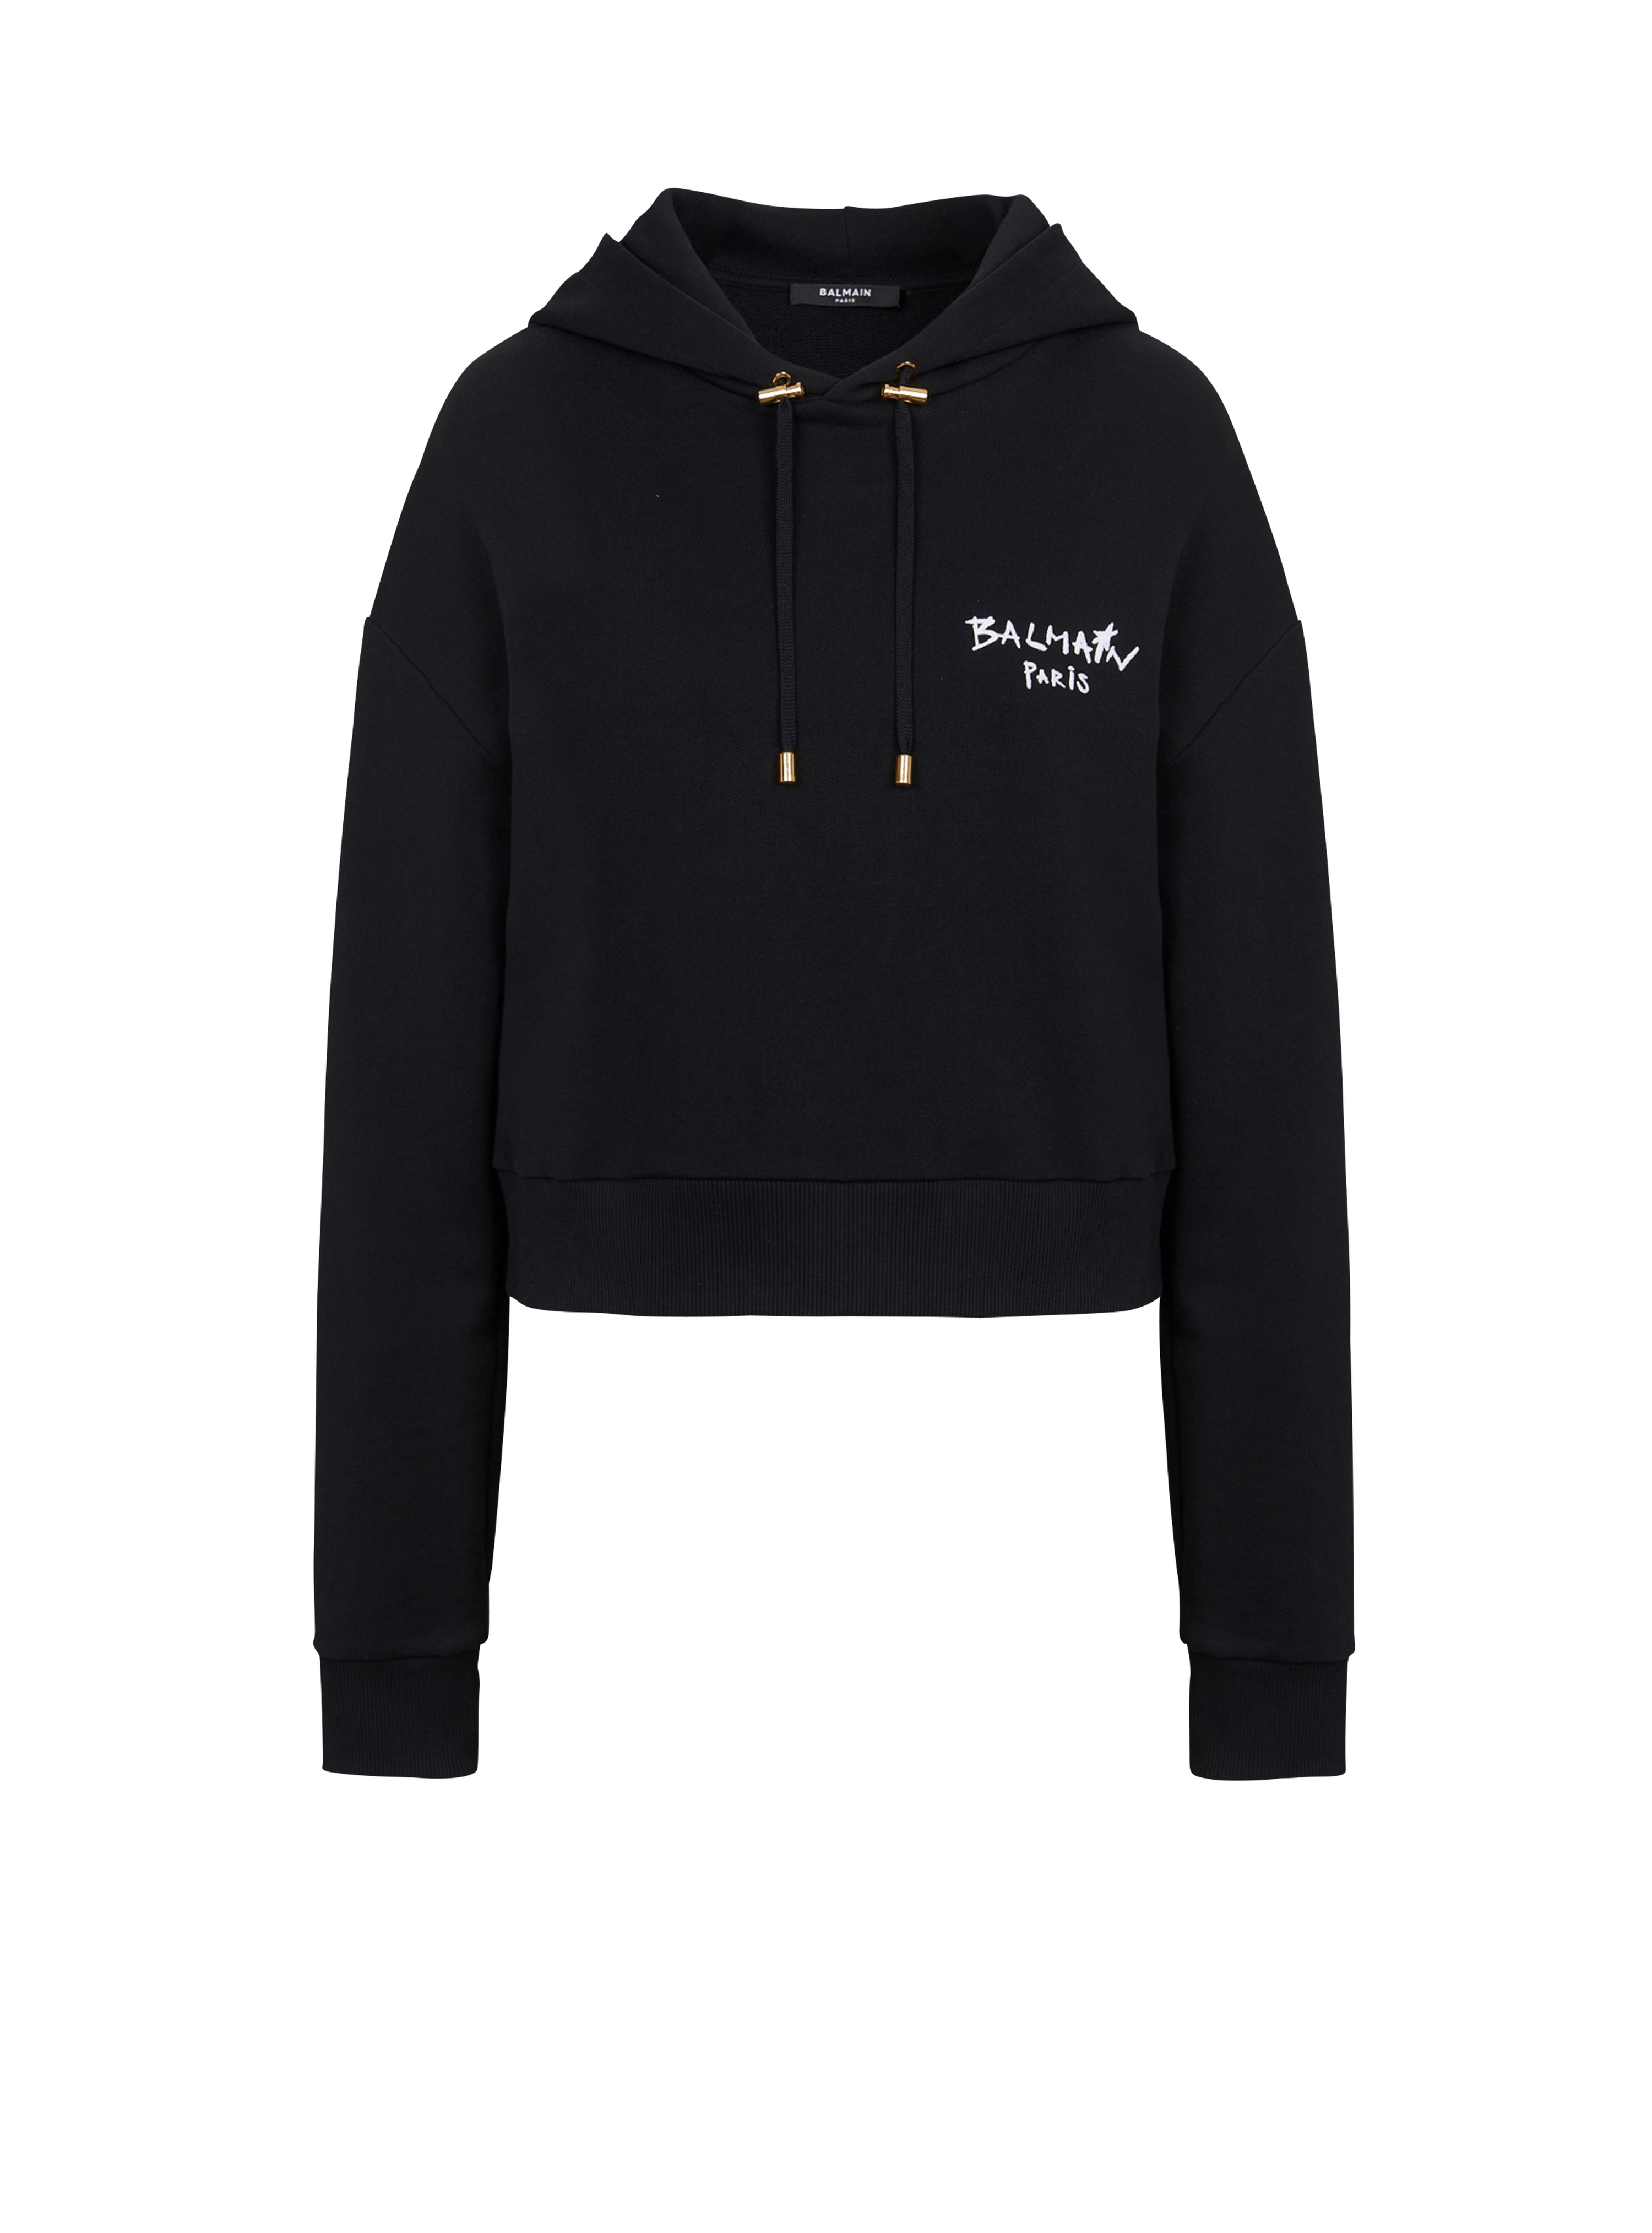 Cropped eco-design cotton sweatshirt with flocked graffiti Balmain logo, black